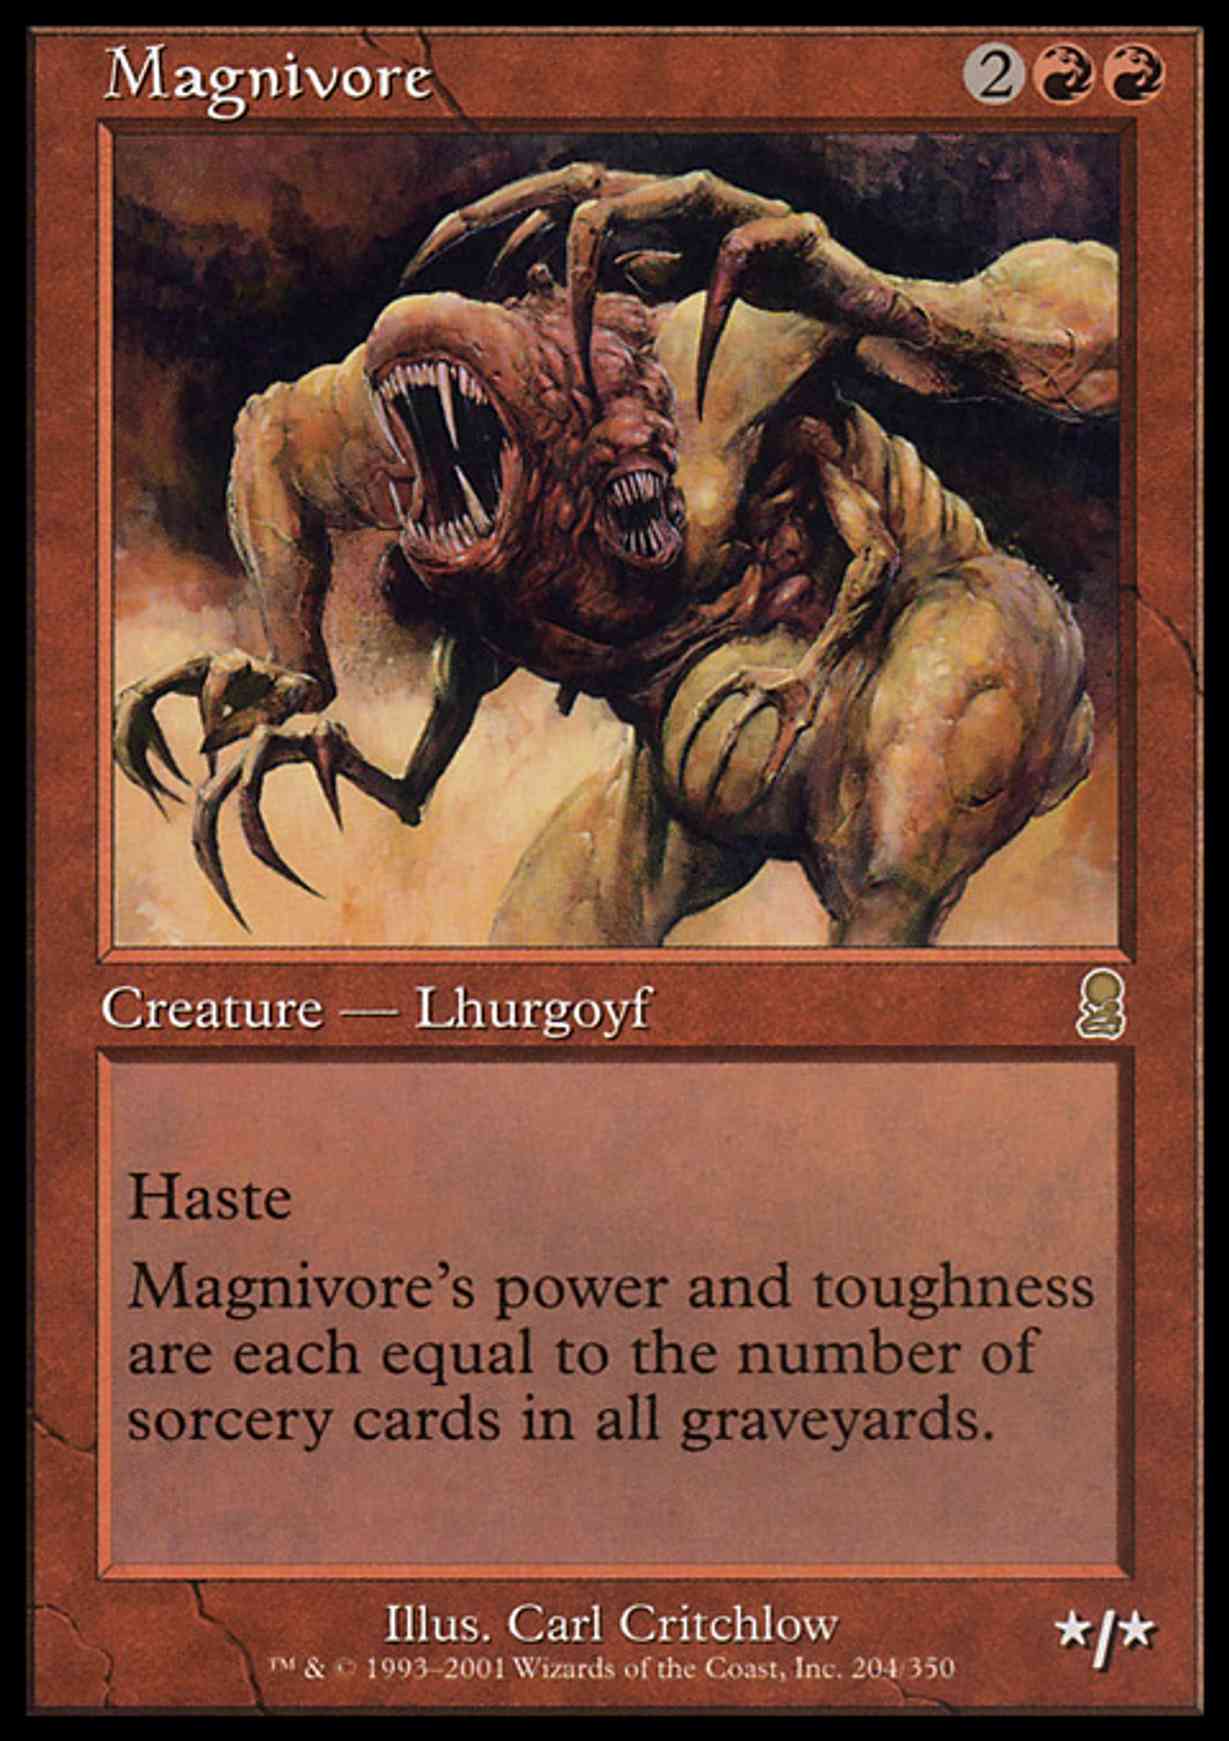 Magnivore magic card front